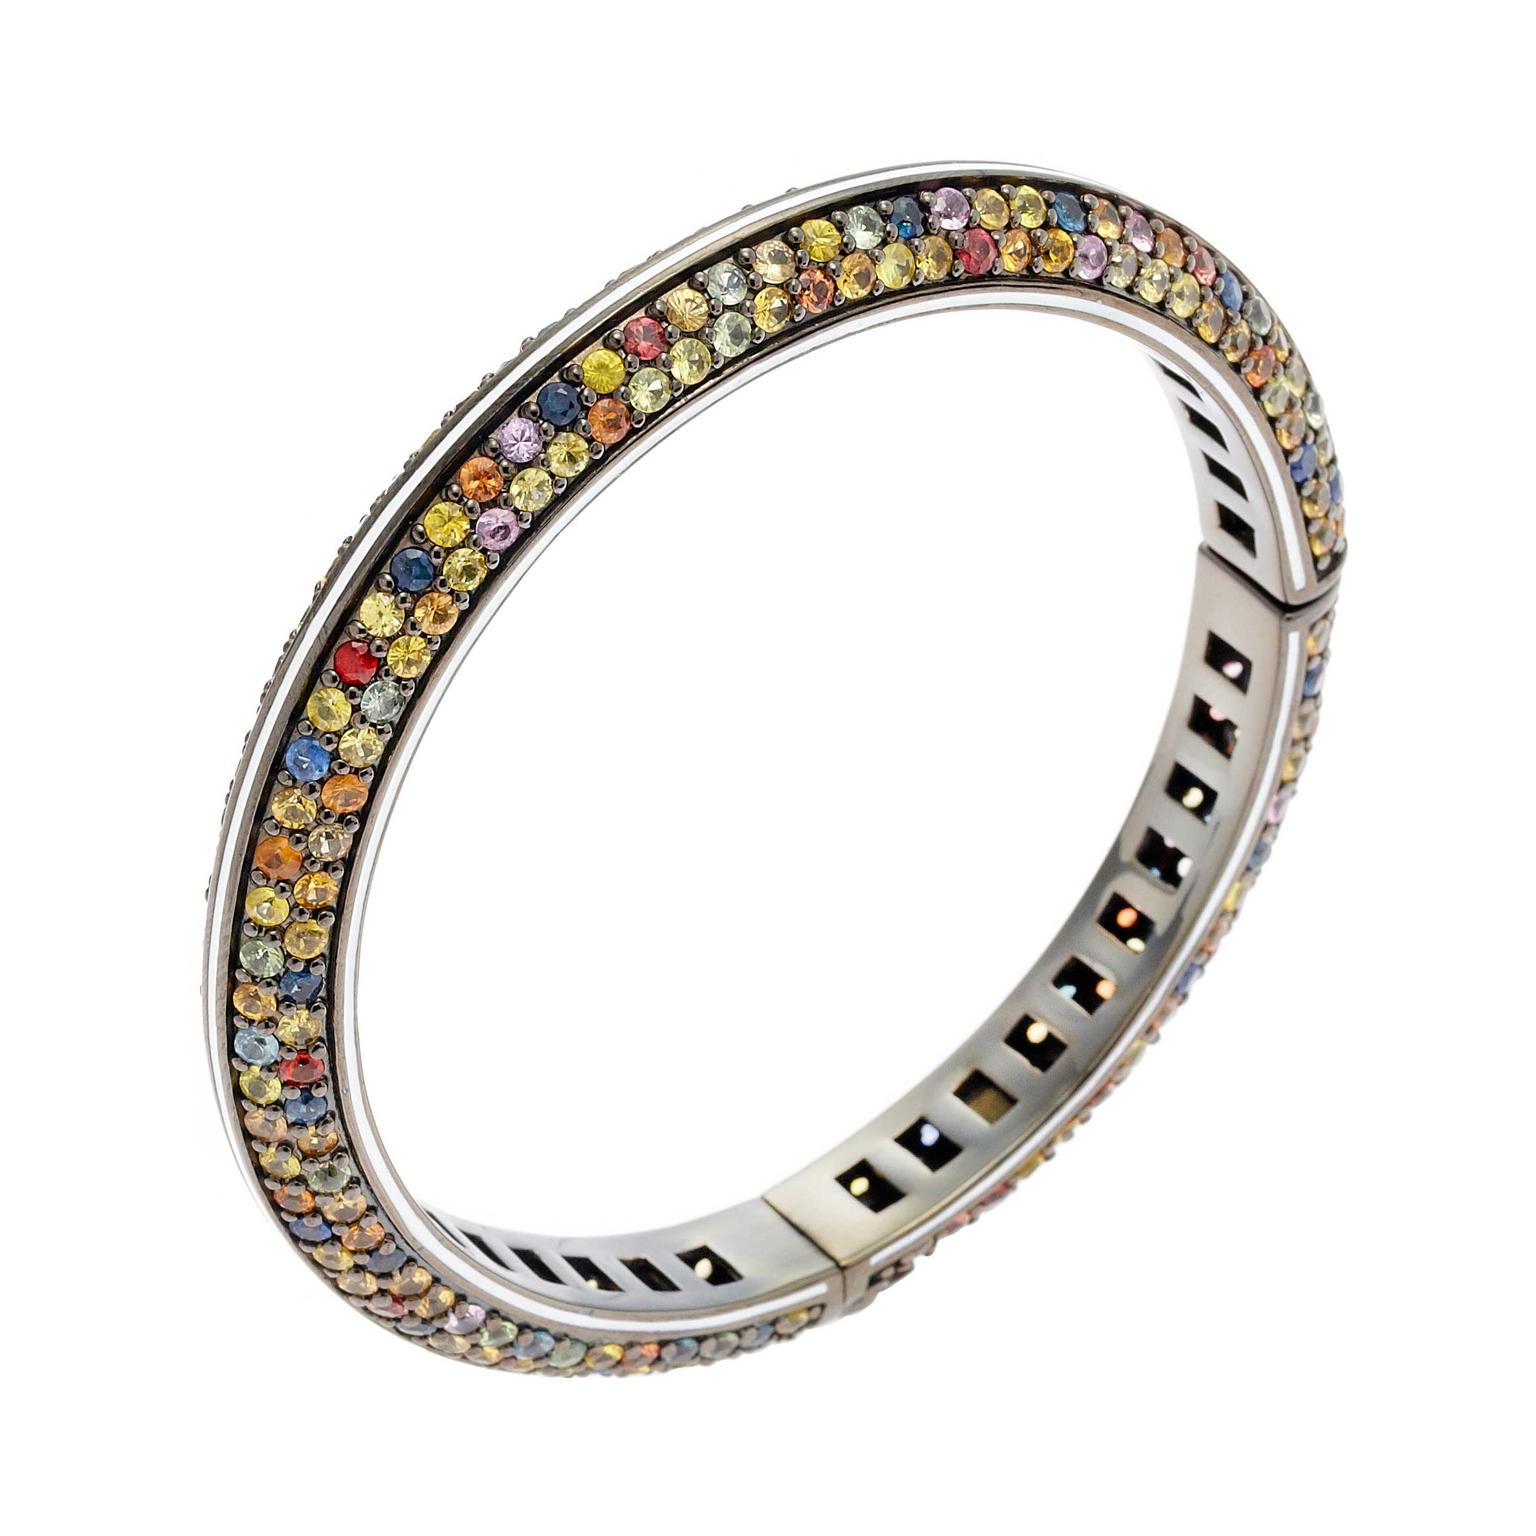 Matthew Campbell Laurenza Orbit silver bracelet with sapphires in black rhodium